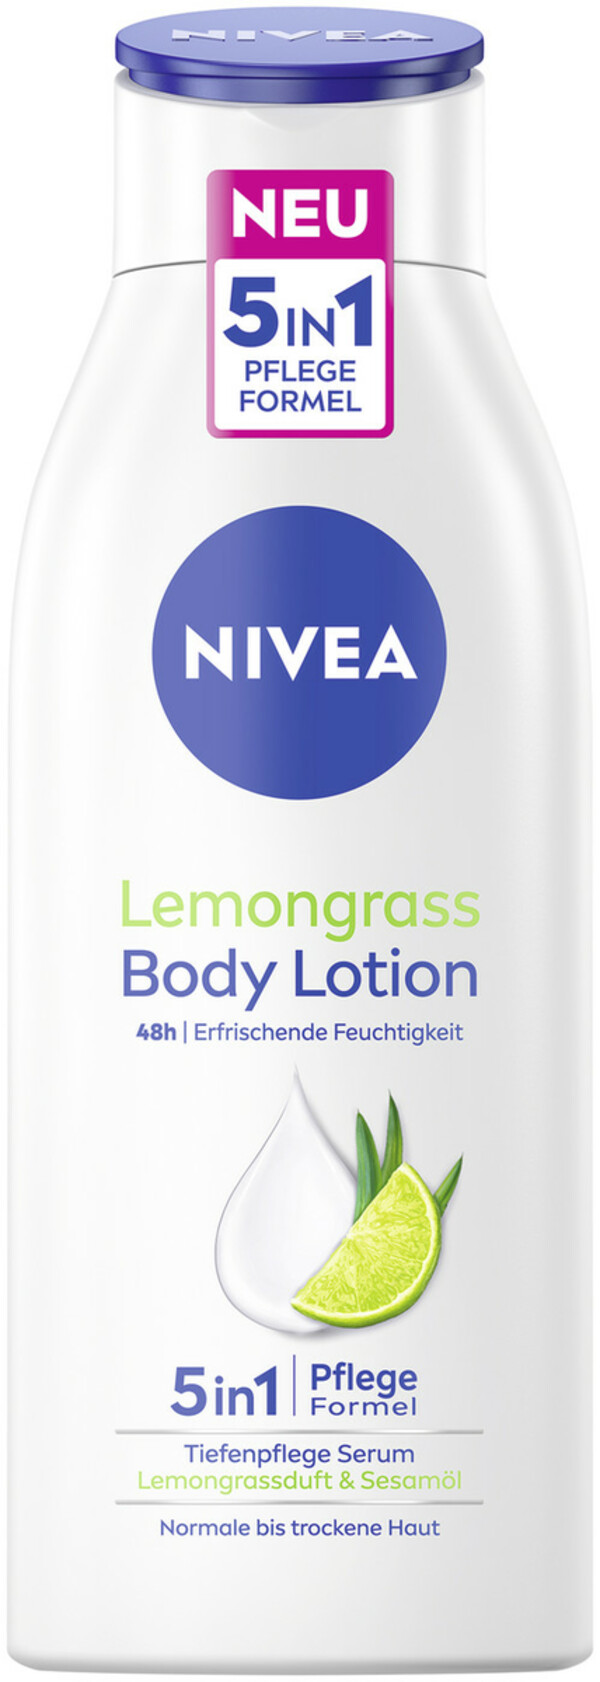 Bild 1 von Nivea Bodylotion Lemongrass 48h Tiefenpflege Serum 400ML